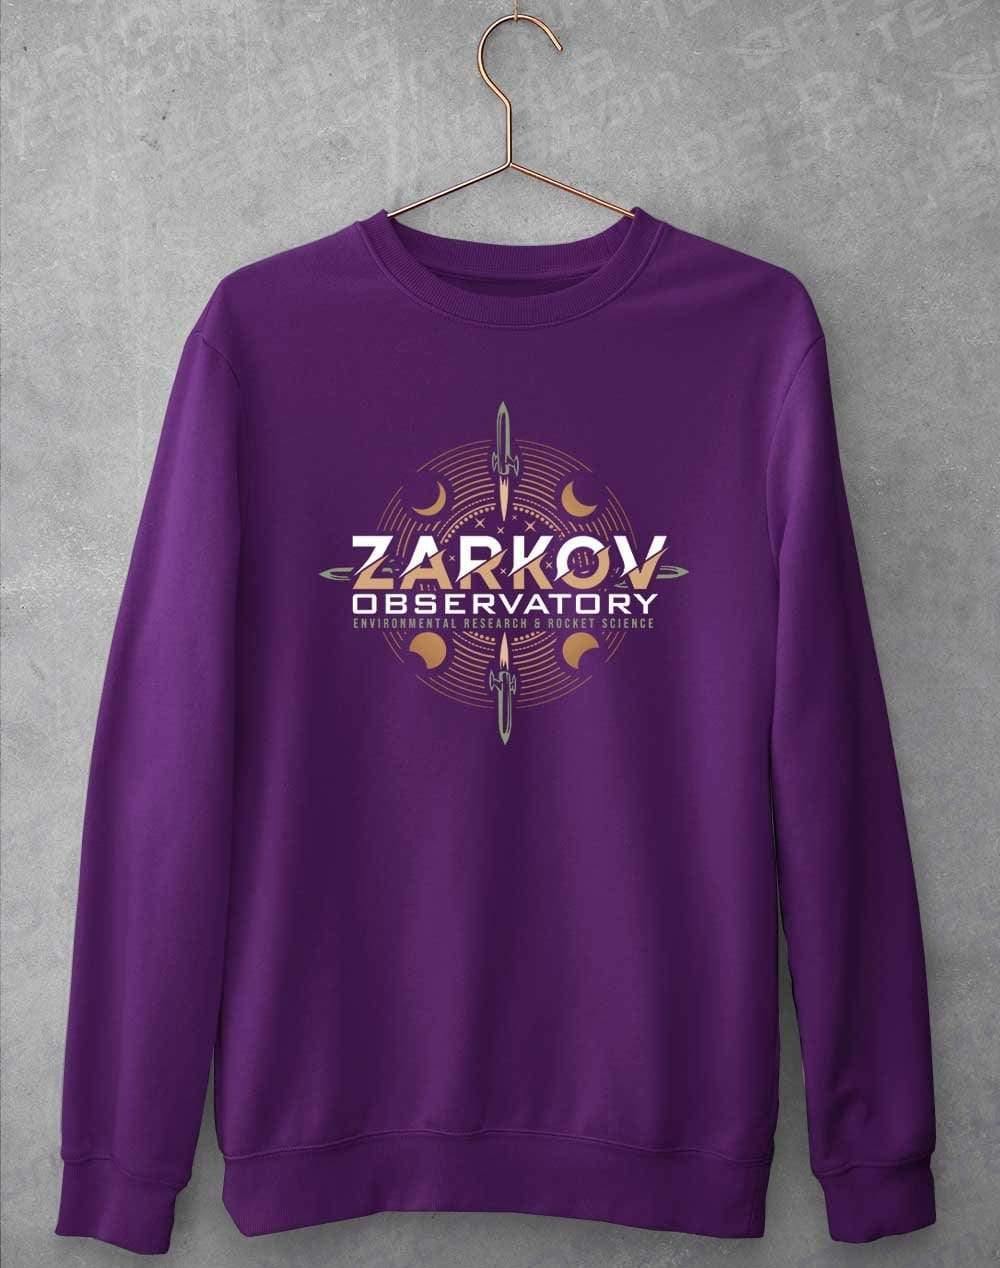 Zarkov Observatory Sweatshirt S / Purple  - Off World Tees